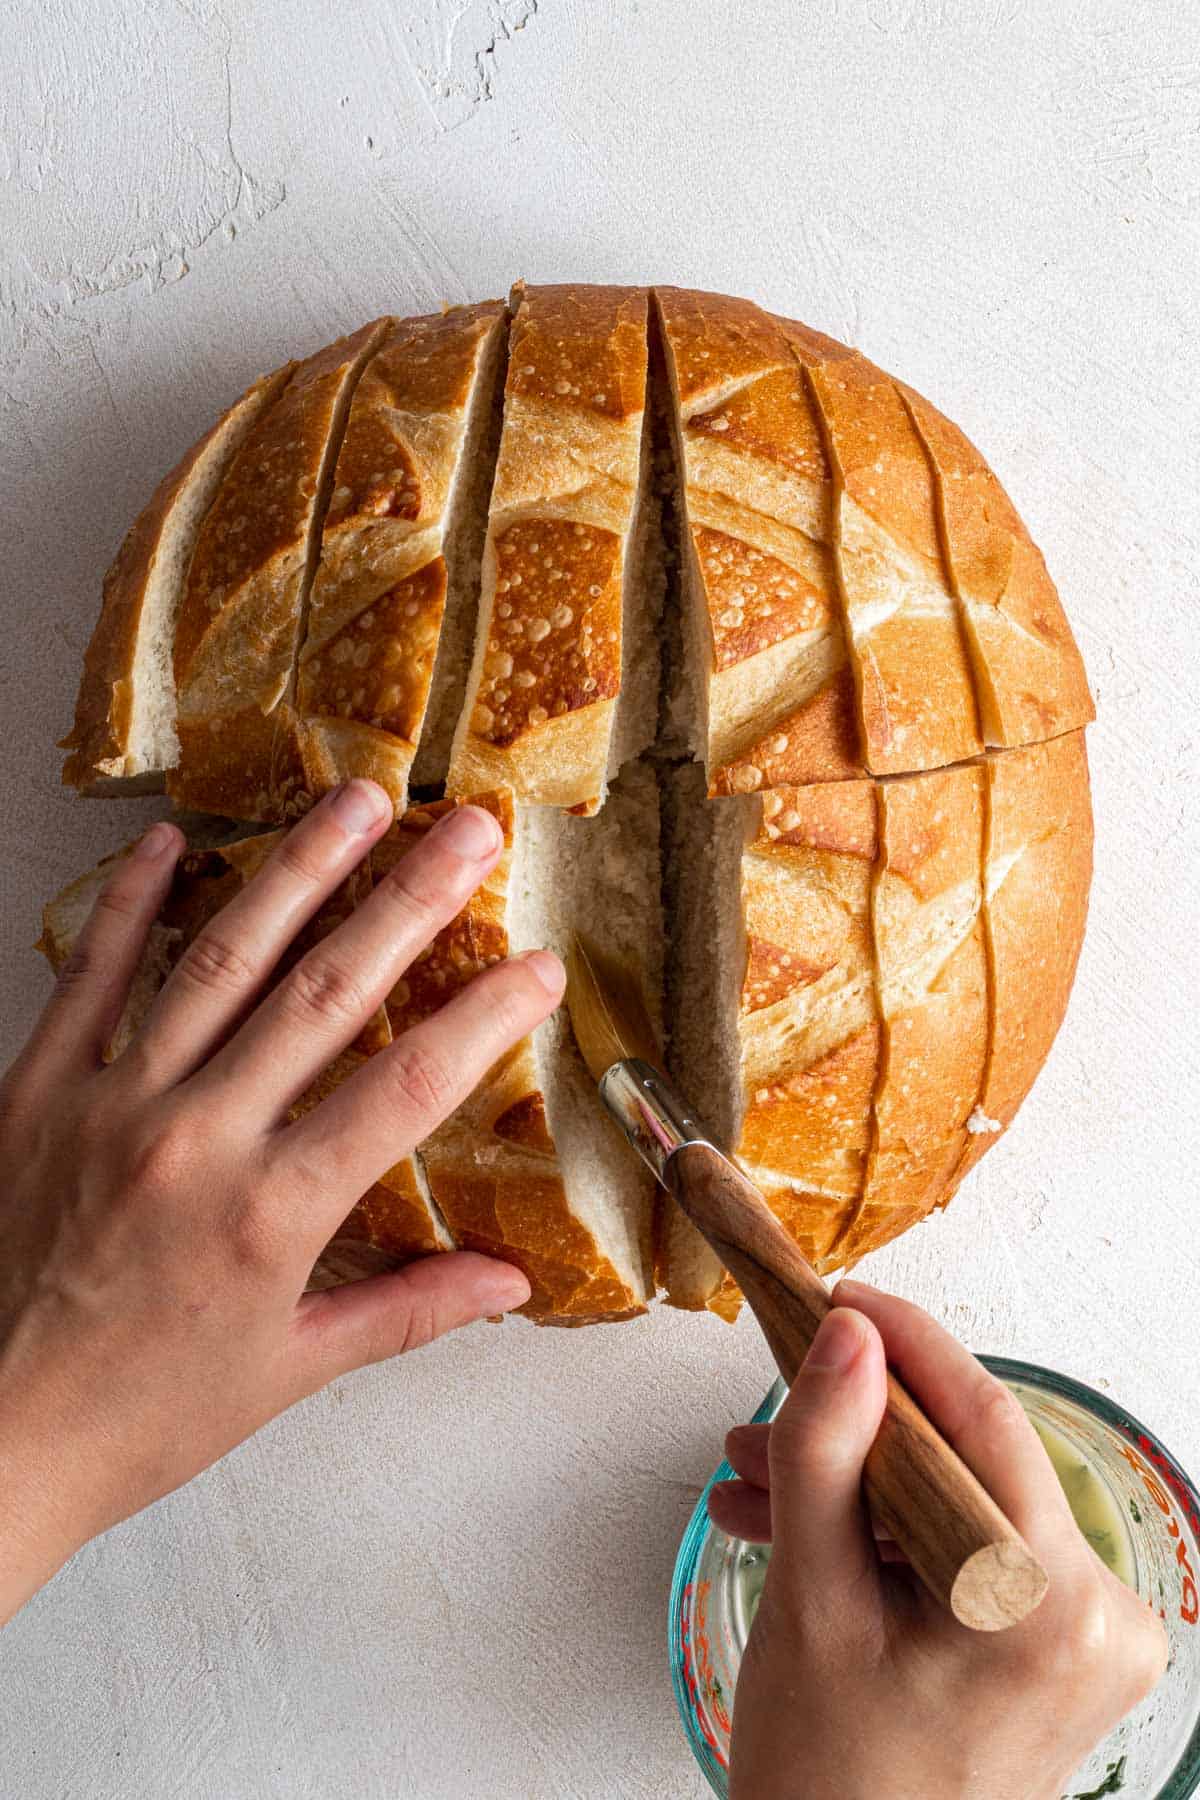 Brushing the bread with vegan garlic butter.